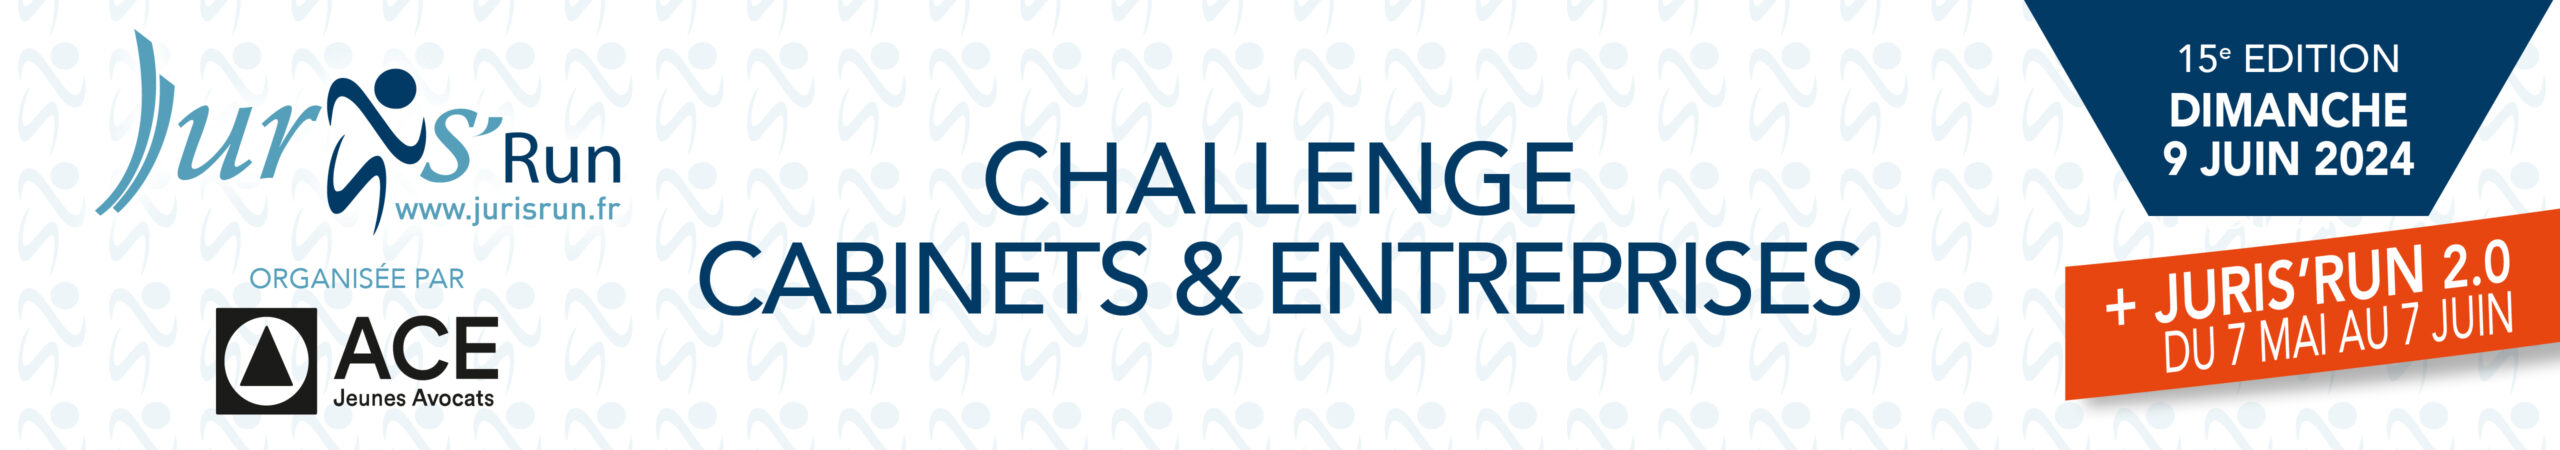 Challenge Cabinets & Entreprises